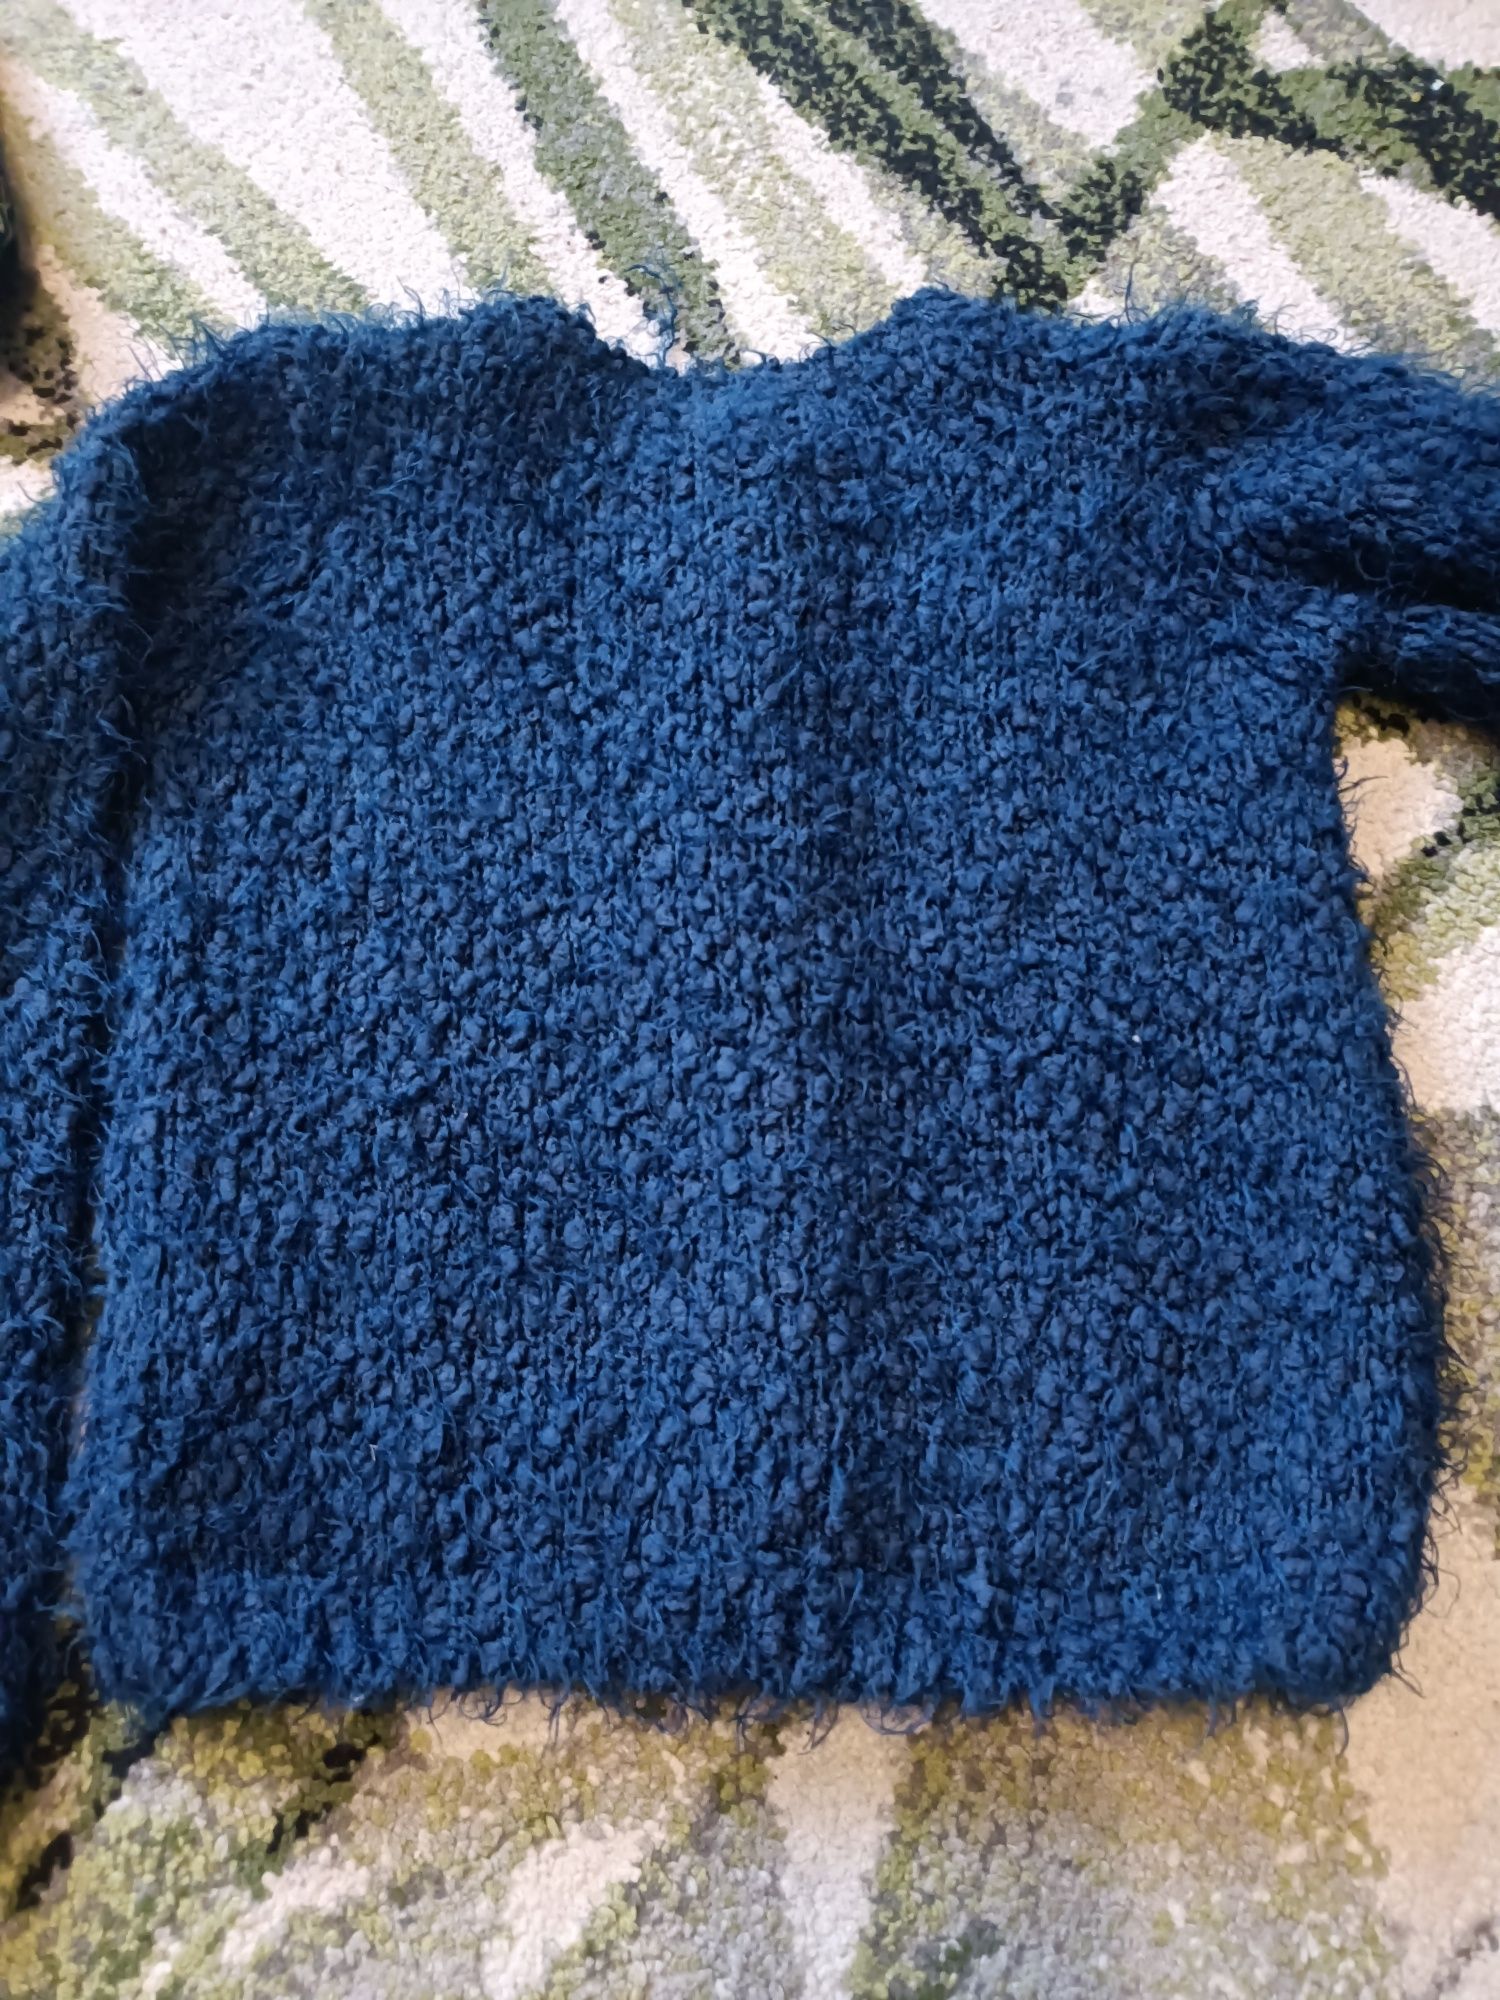 Reserved sweterek r.104-110